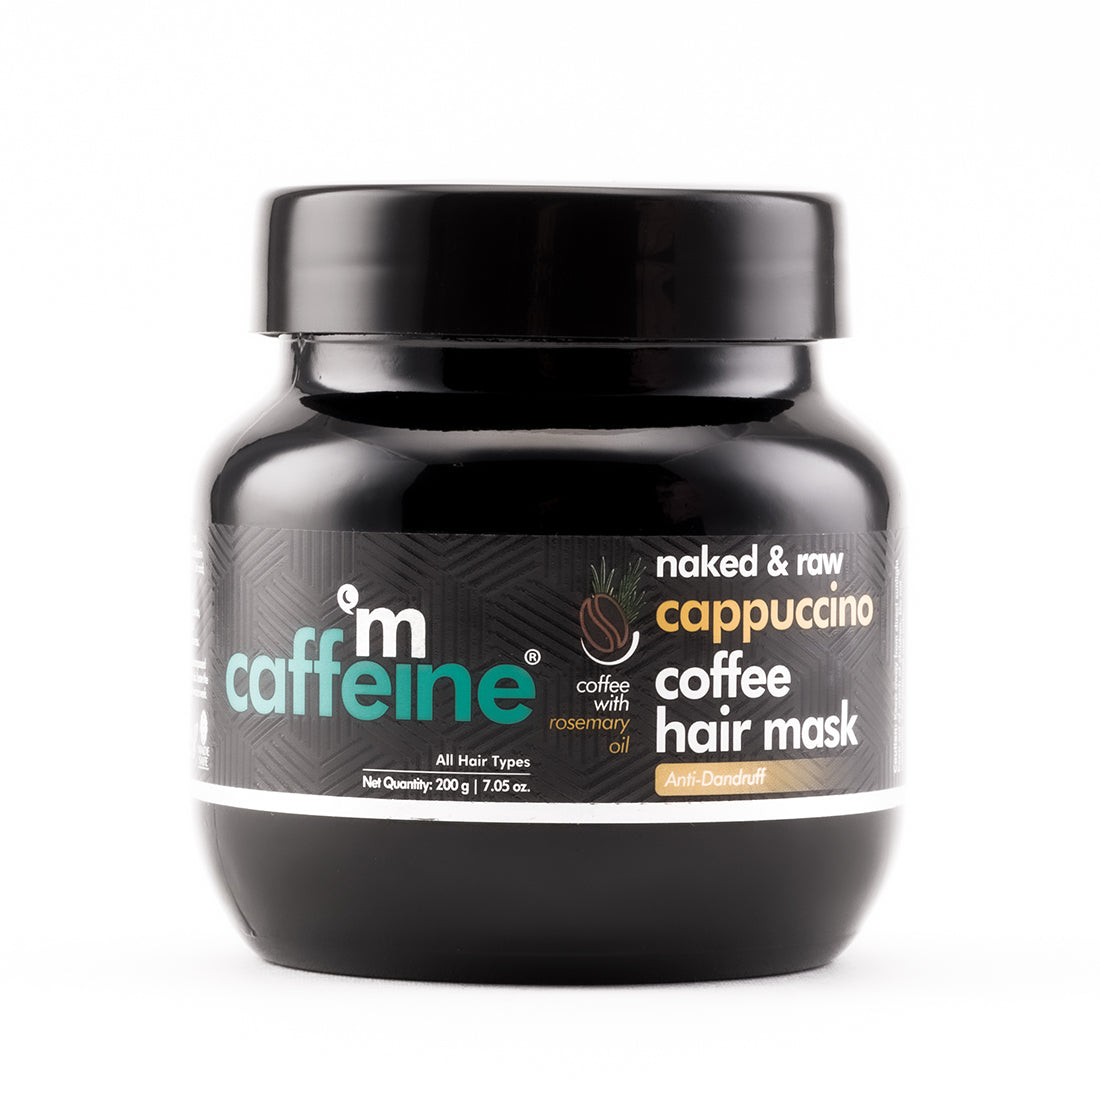 mCaffeine Coffee Hair Mask